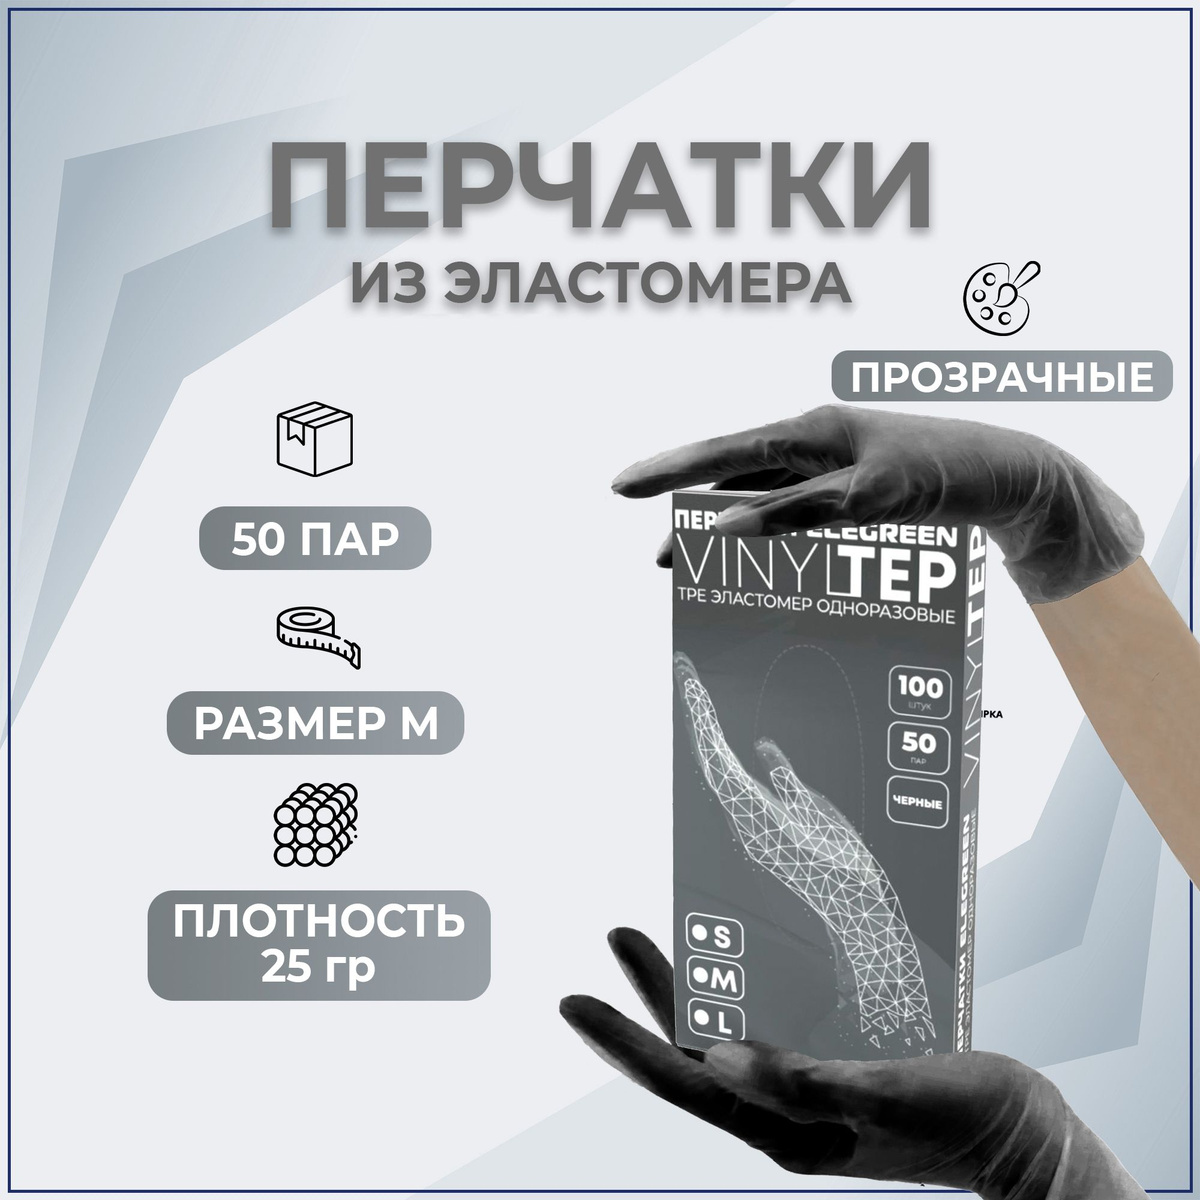 Перчатки медицинские, 50пар, размер M Термопластический эластомер (TPE)